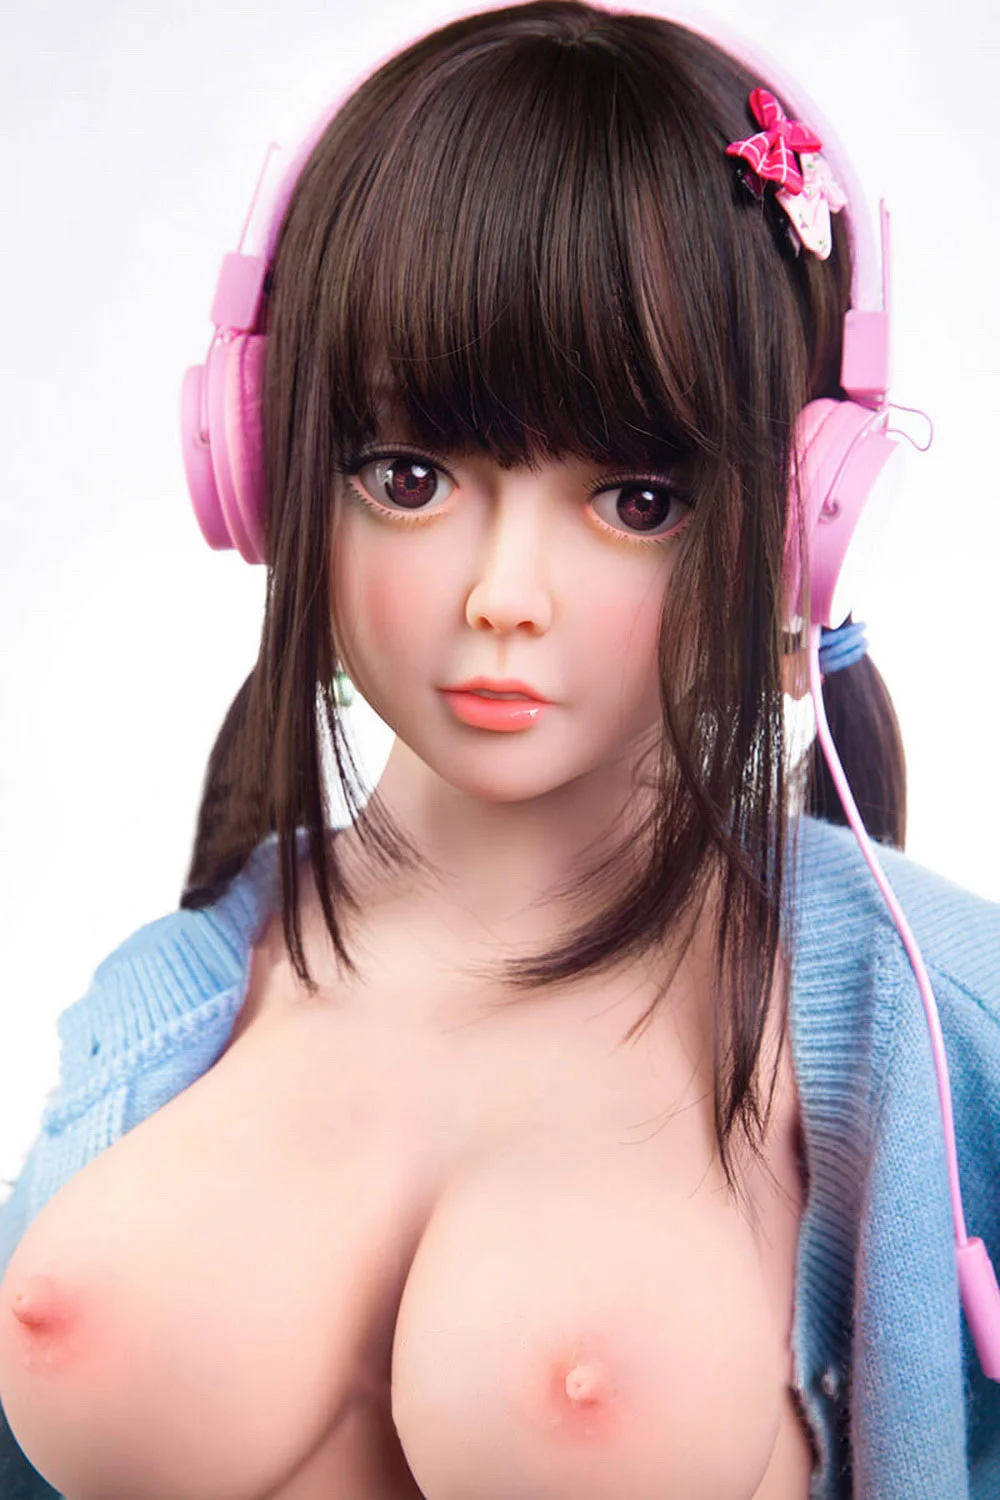 Anime sex doll with headphones